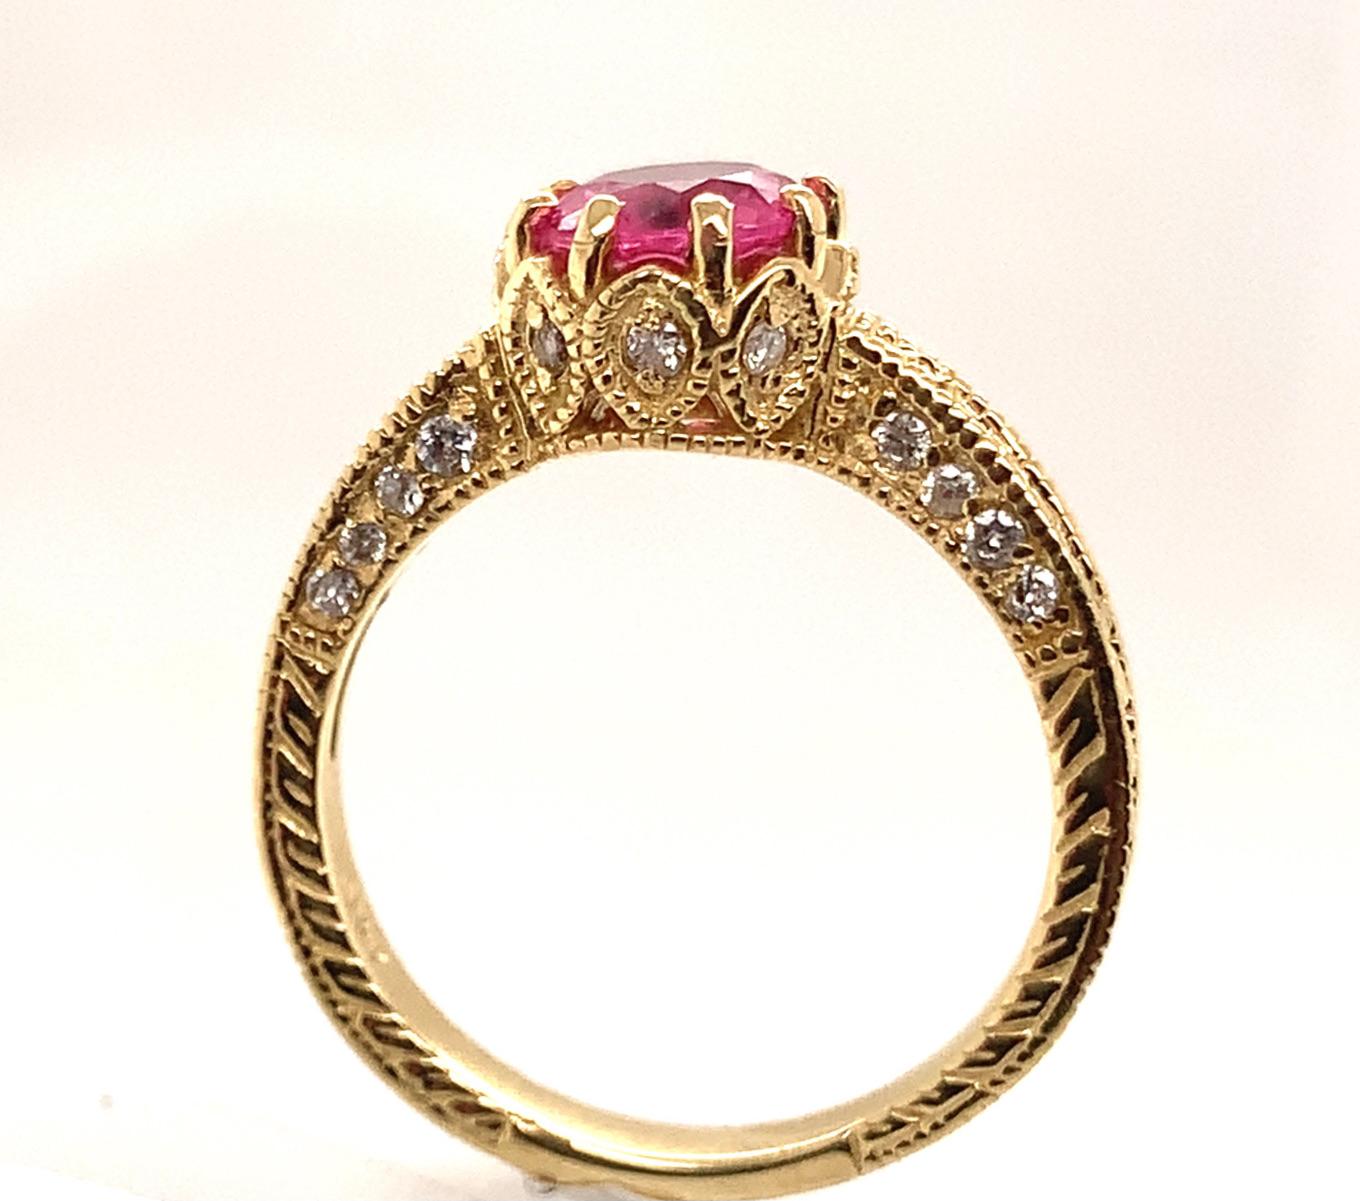 Round Cut 1.16 Carat Pink Spinel Ring with Diamonds in 14 Karat Gold